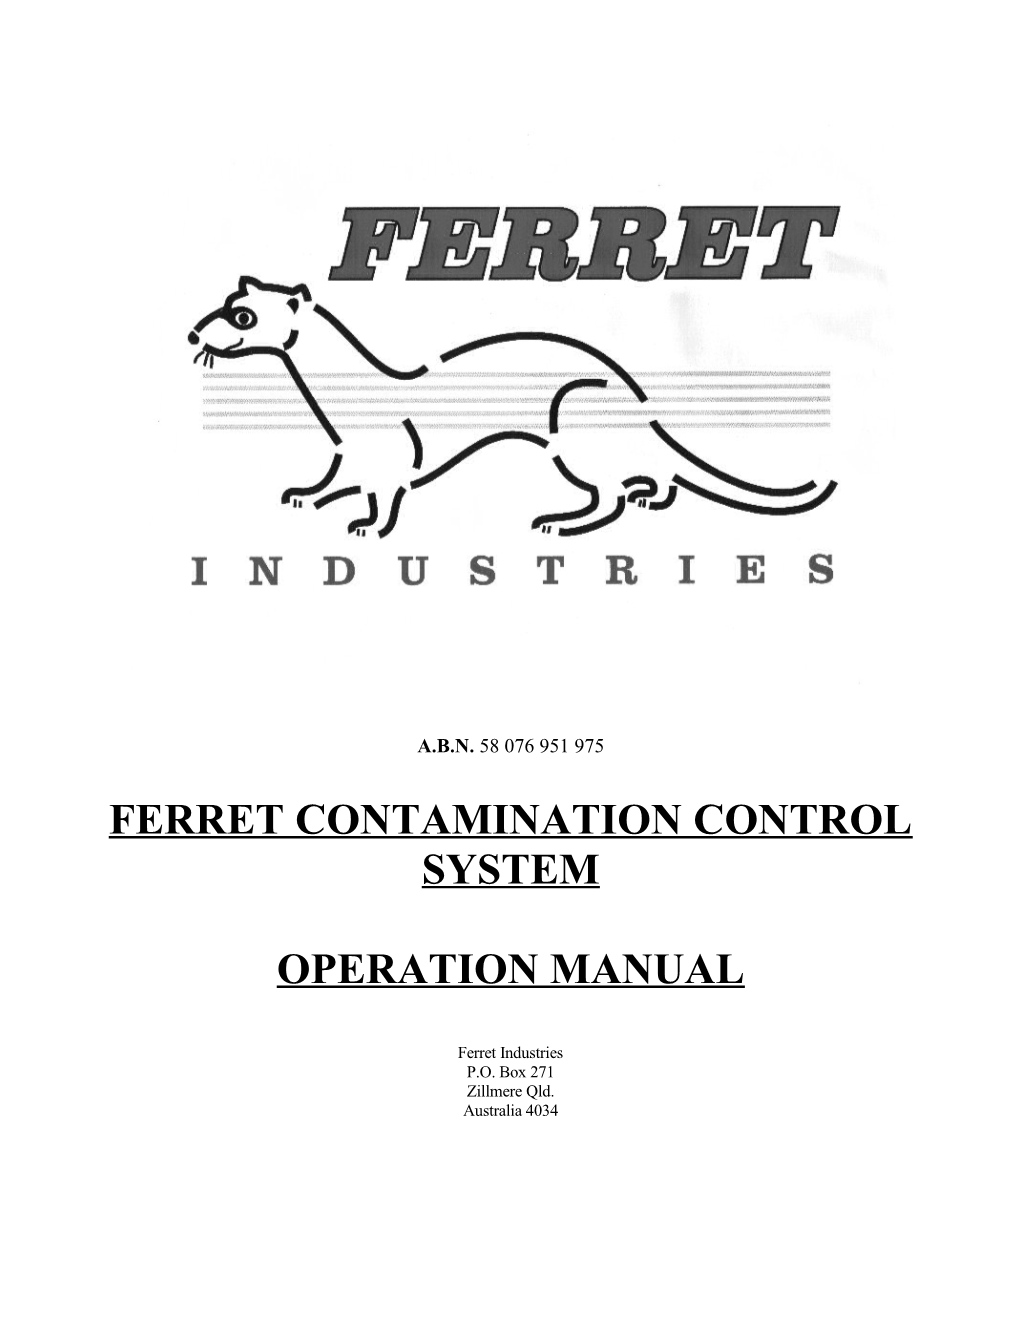 Ferret Contamination Control System